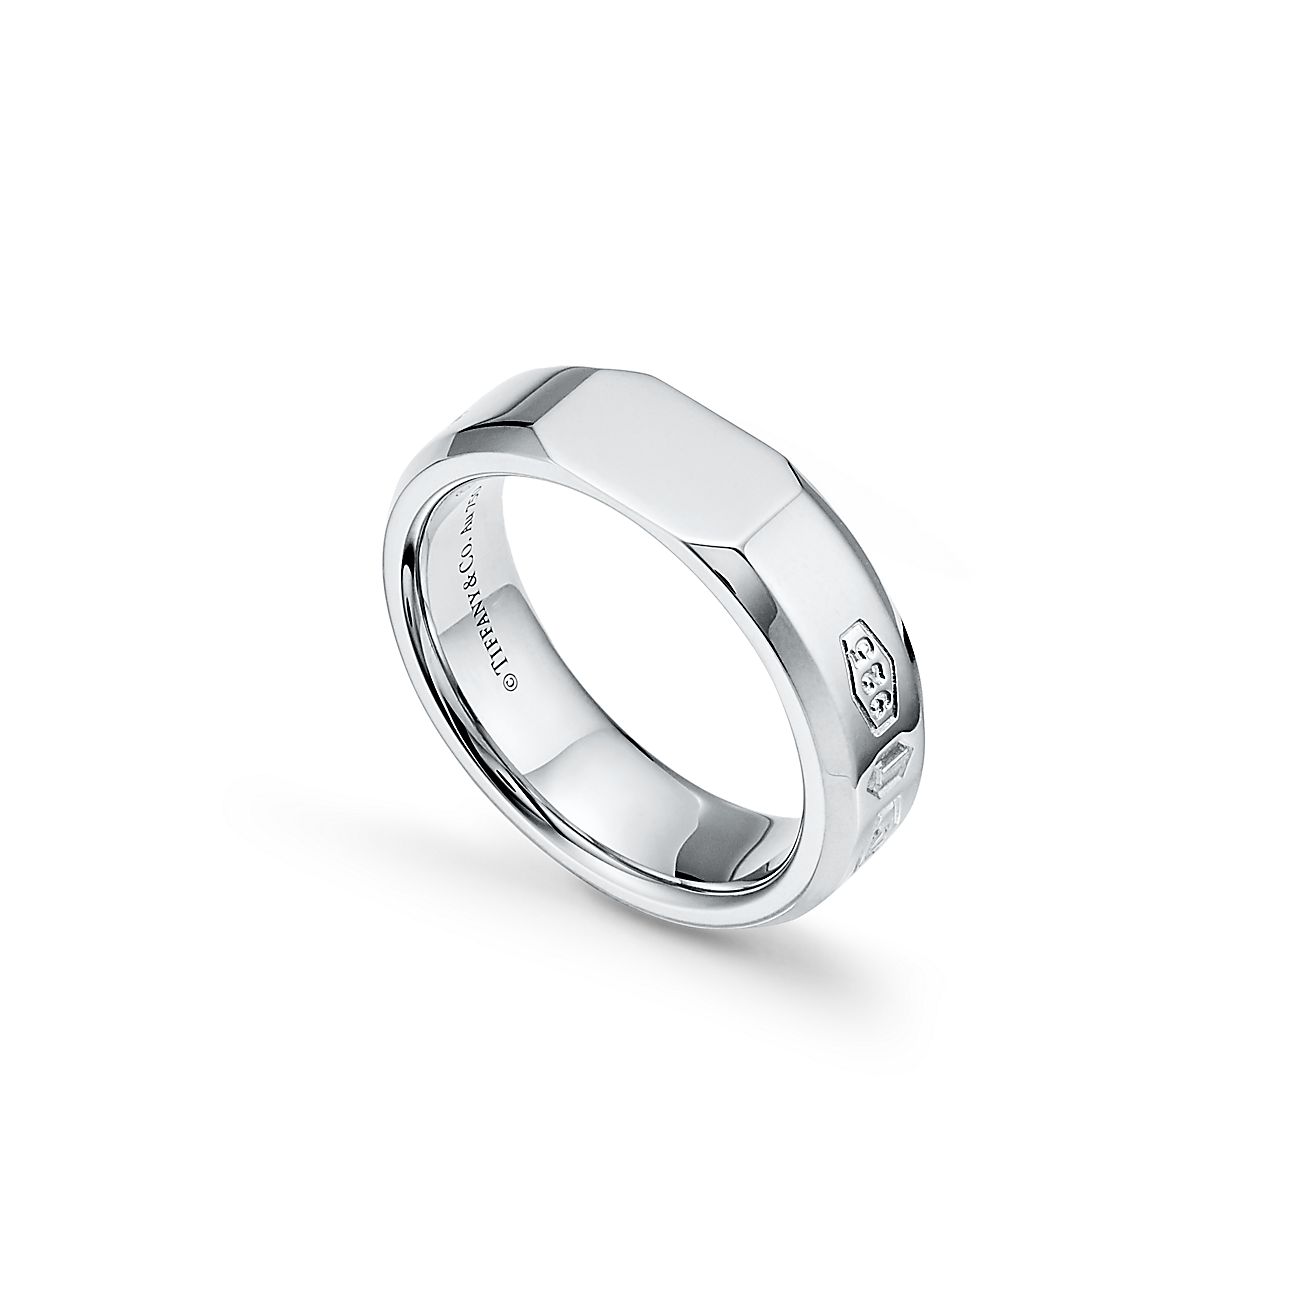 Tiffany 1837® Makers Medium Slice Ring in Sterling Silver